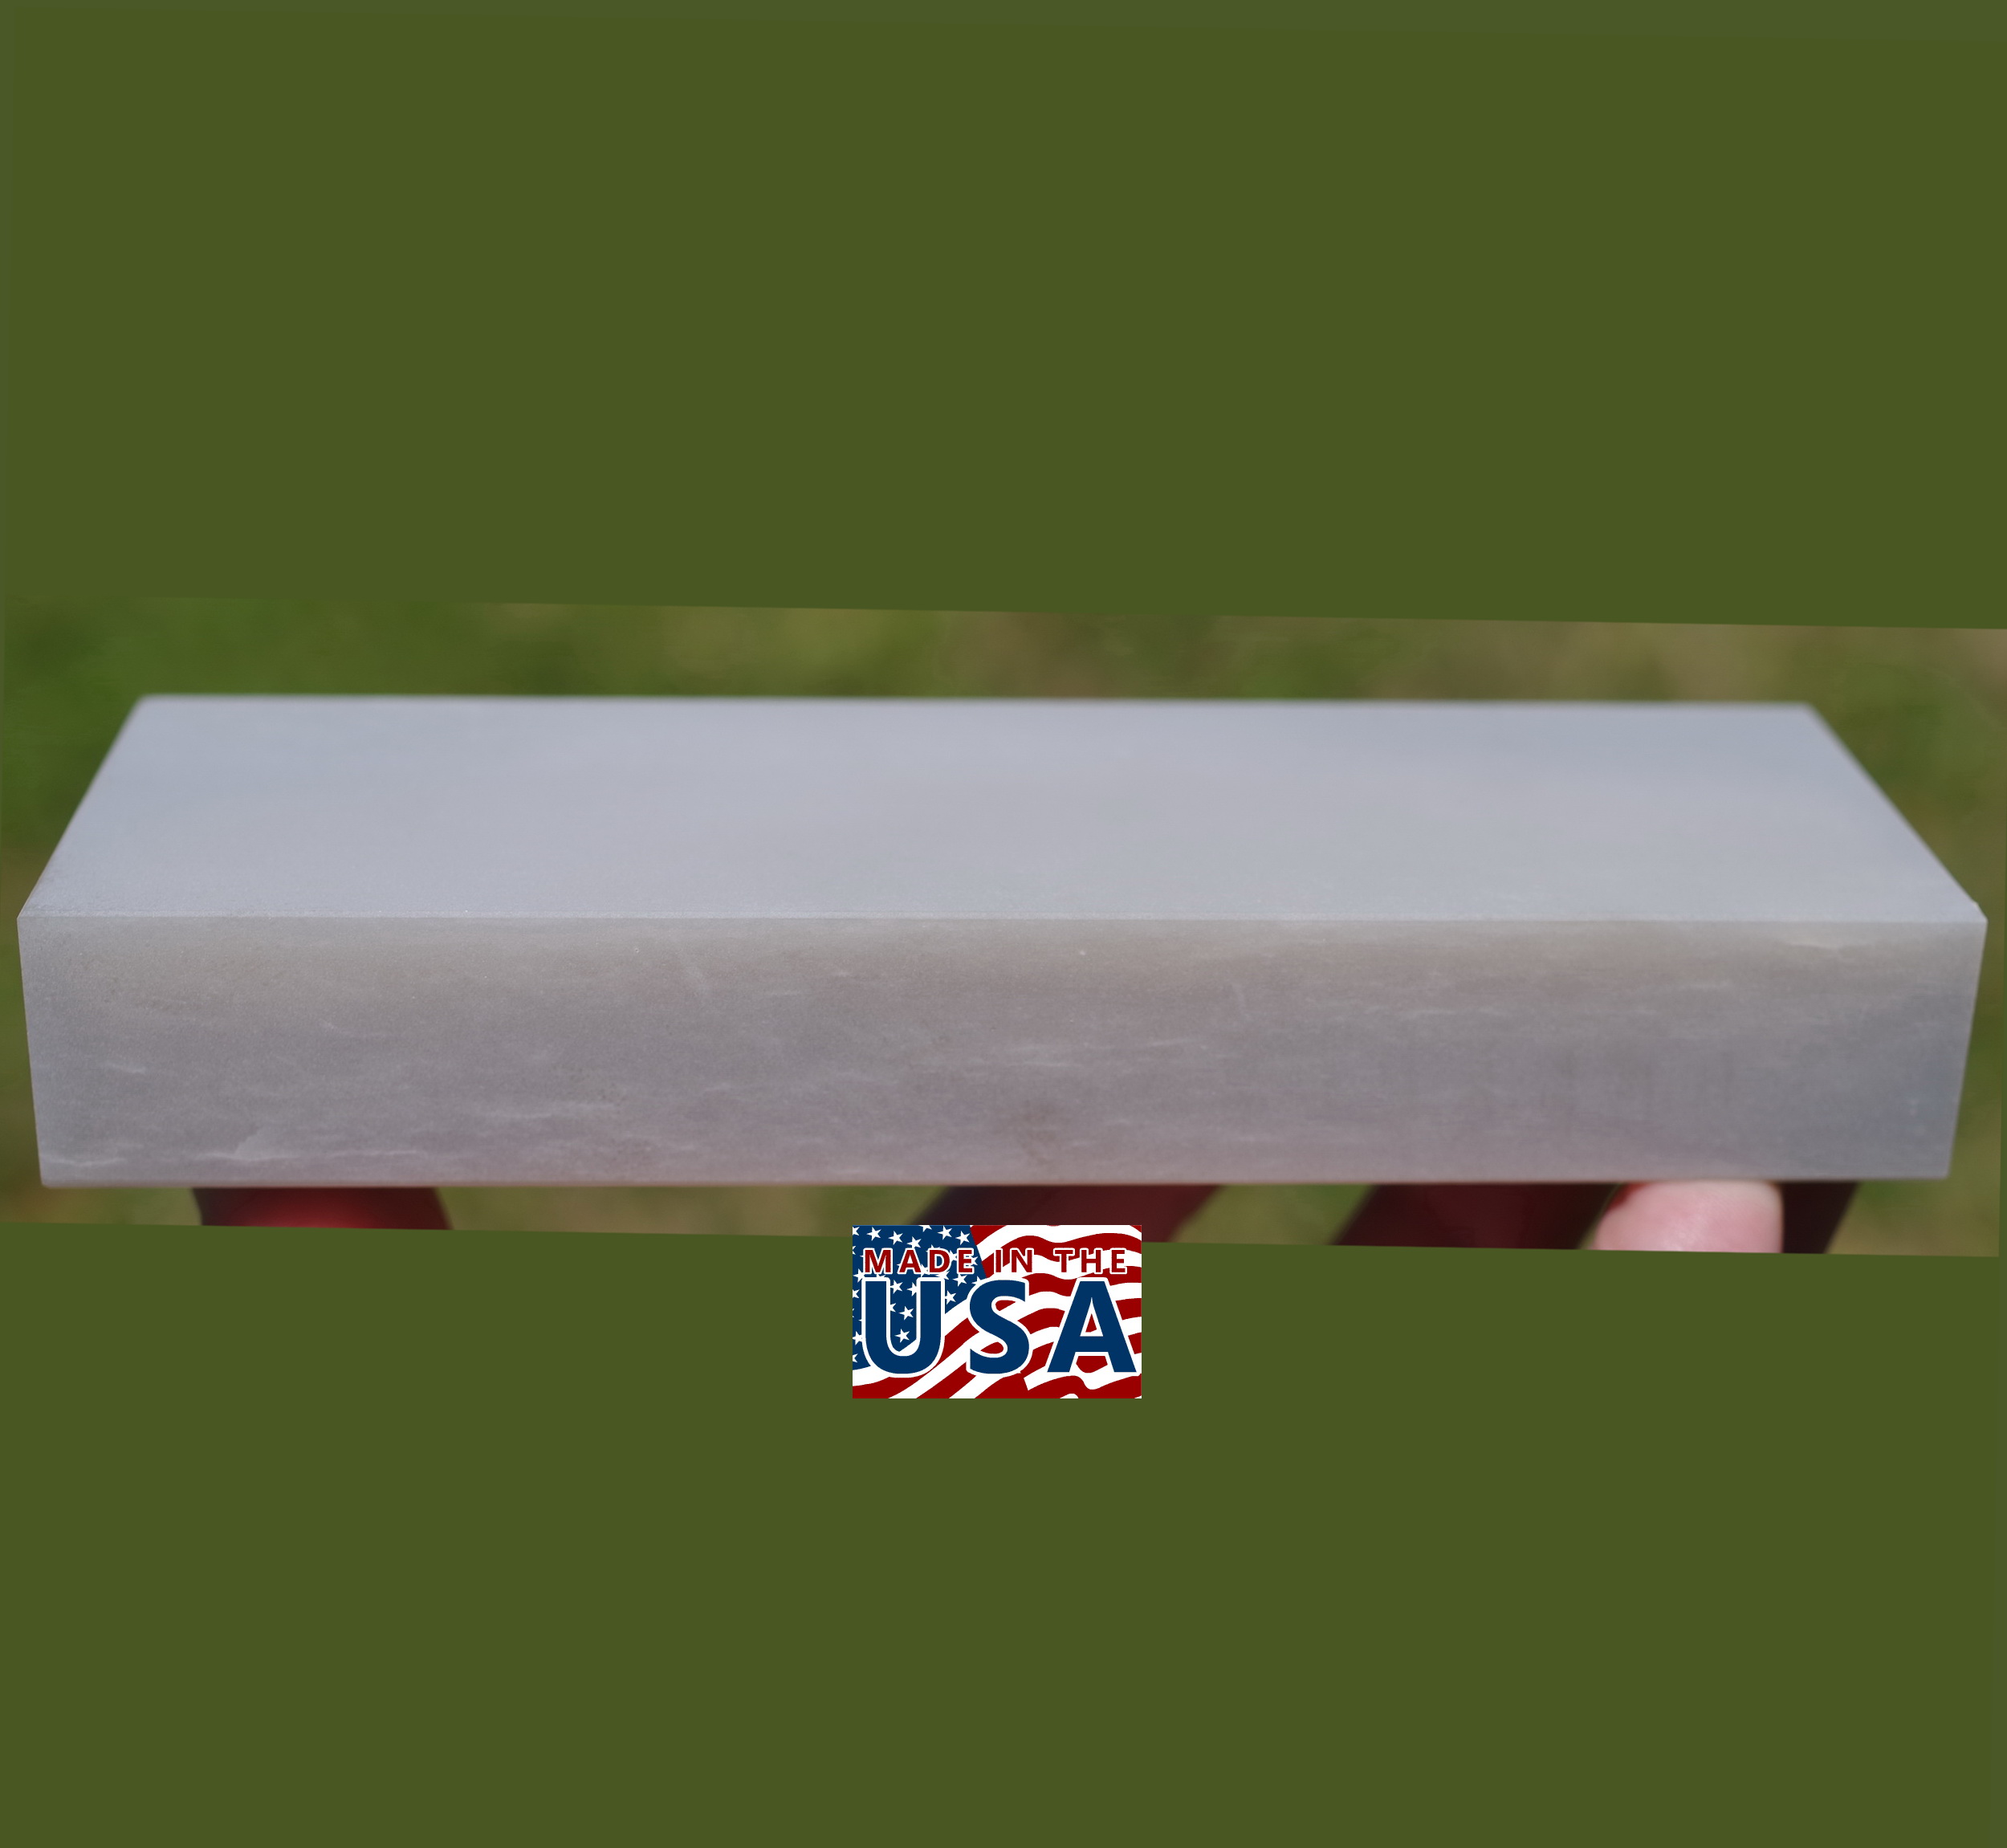 Dan's Whetstone Translucent Extra-Fine Bench Stone in Wooden Box (6 x 2 x  1/2) - KnifeCenter - TAB-62-C